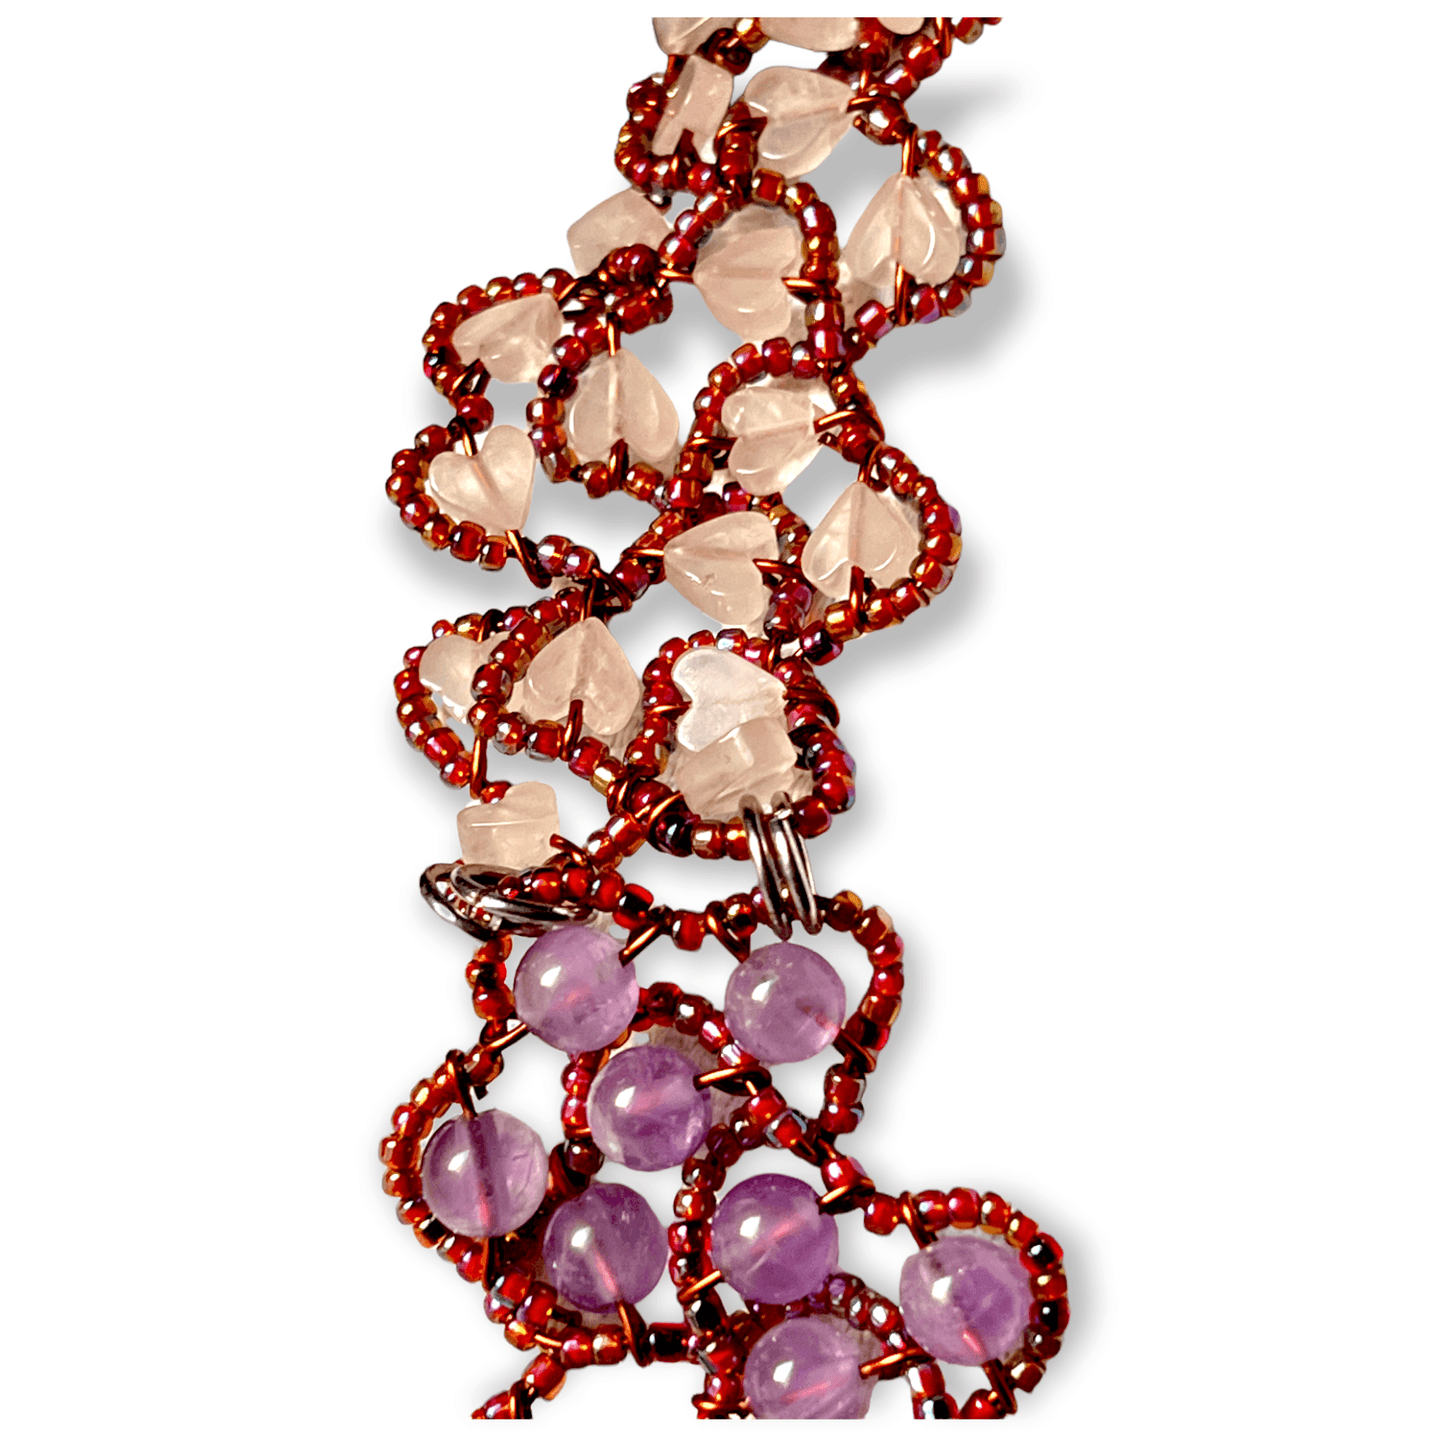 Pink and purple amethyst and quartz choker length necklace - Sundara Joon